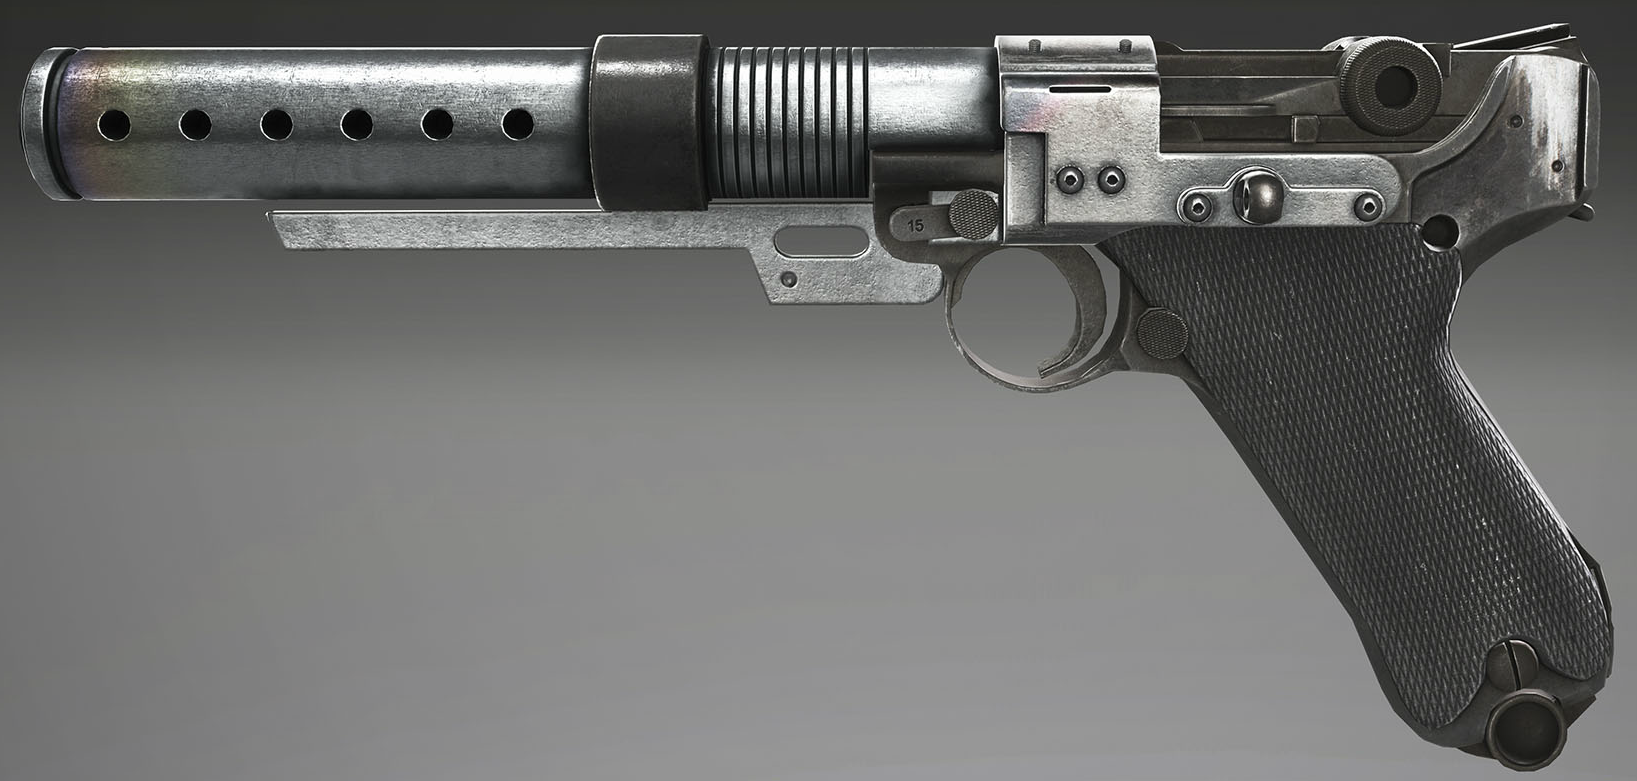 BlasTech Industries A180 Reconfigurable blaster pistol